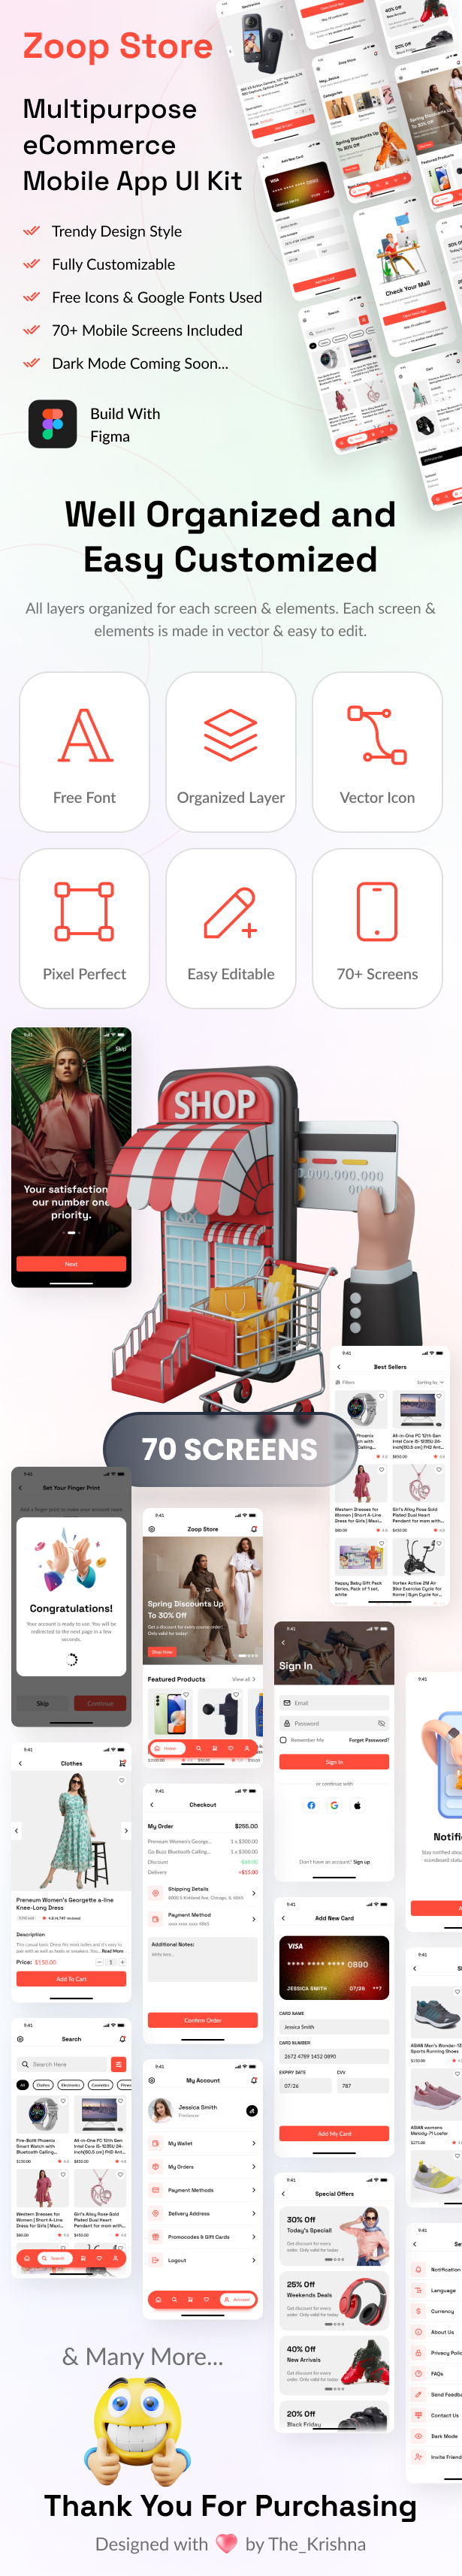 Multipurpose Online eCommerce Mobile App UI Kit Figma Template - Zoop Store - 1